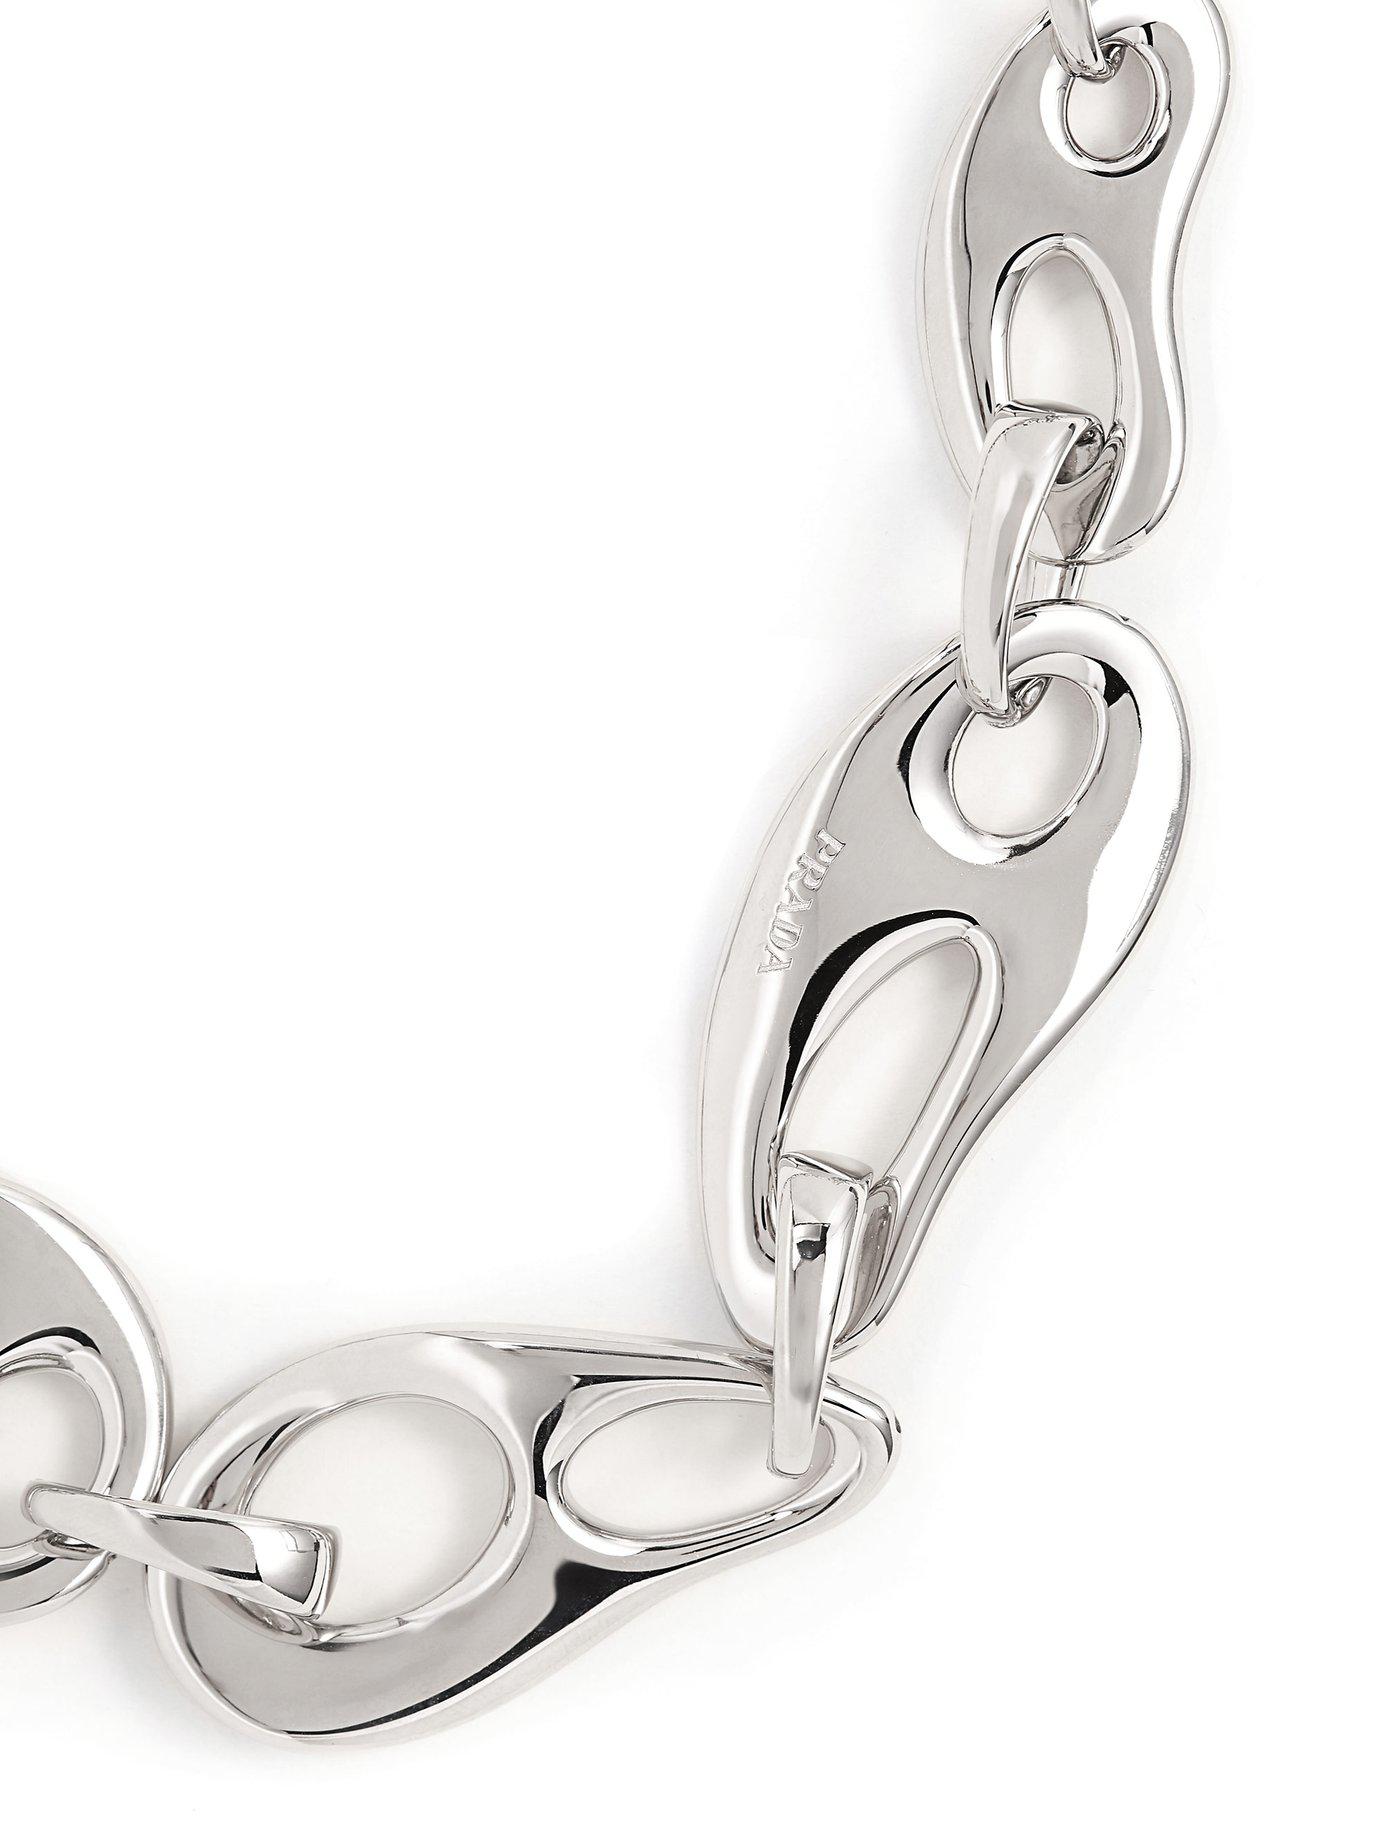 Prada Chain Link Necklace in Silver (Metallic) - Lyst